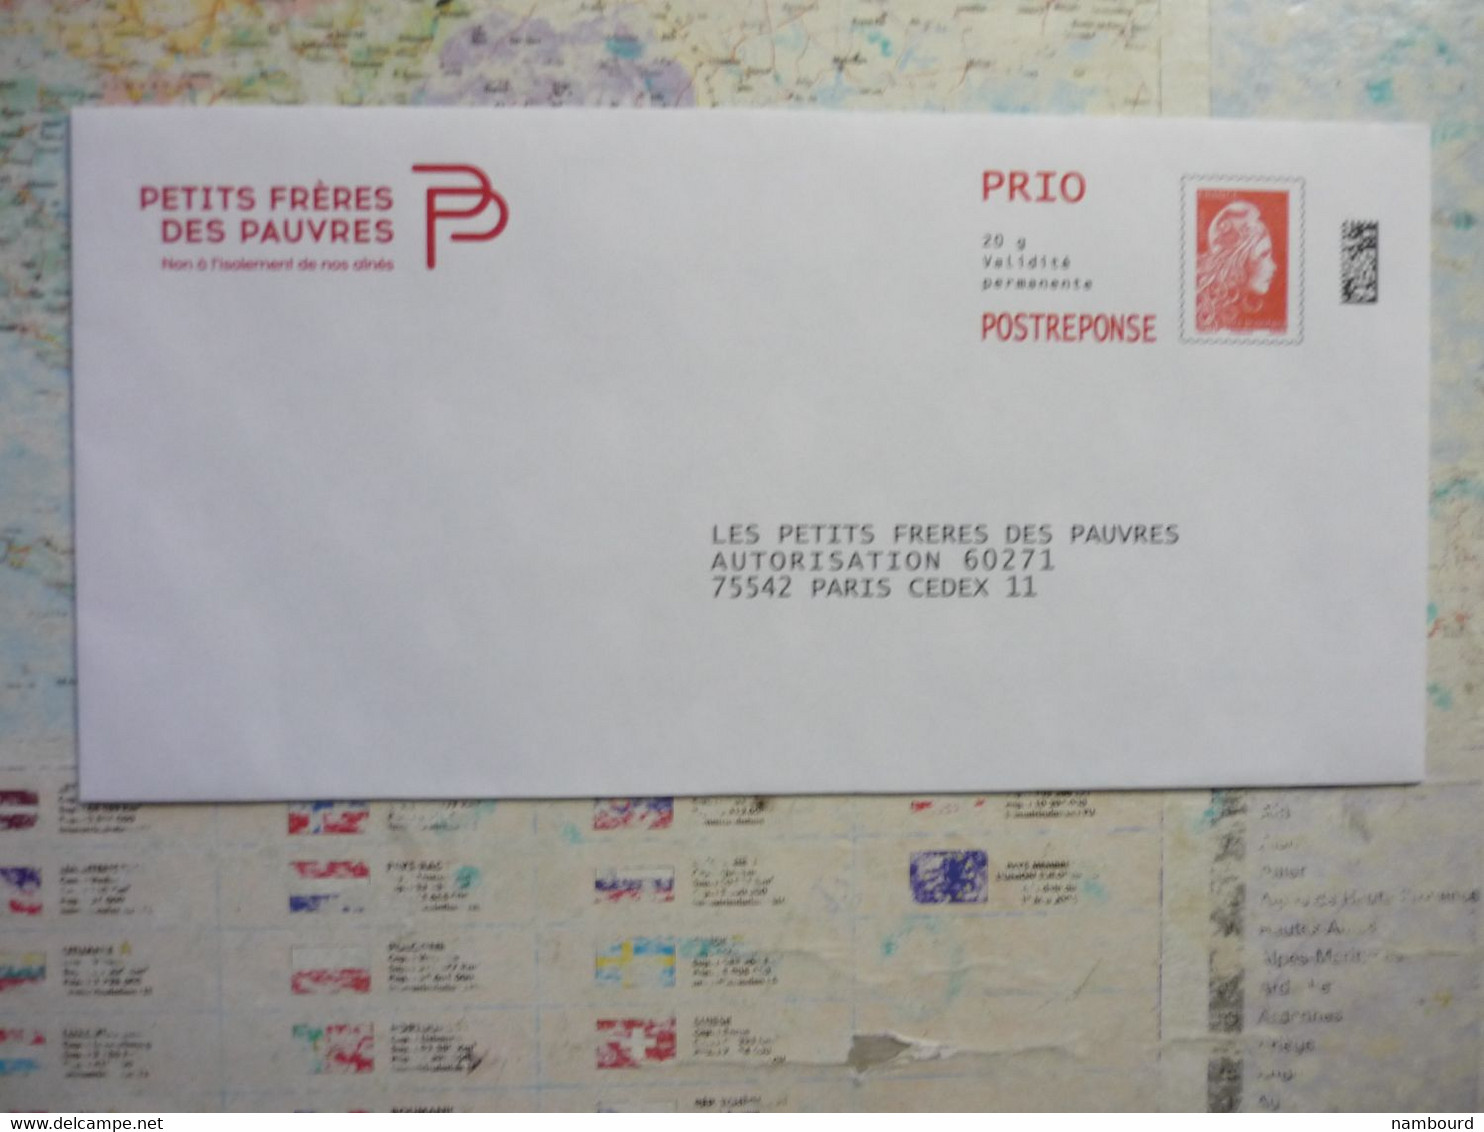 Postreponse Prio Petits Frères Des Pauvres N°246098 - Listos Para Enviar: Respuesta /Beaujard